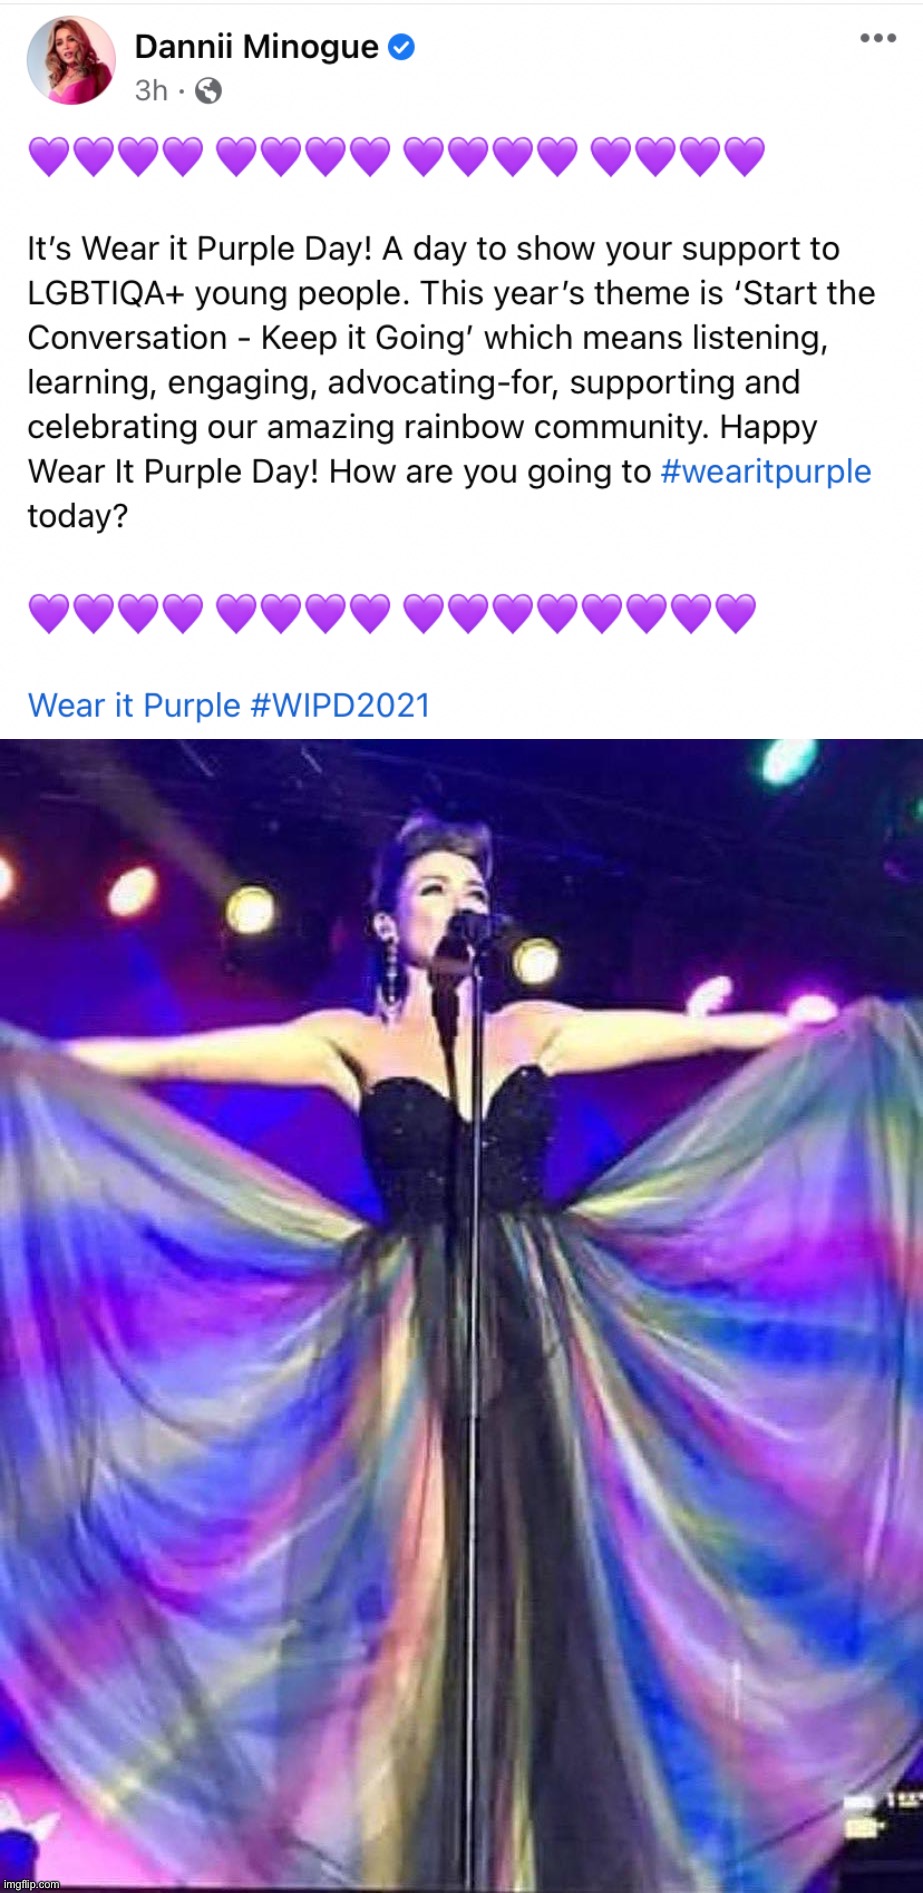 Wear it purple day! :) | image tagged in dannii minogue,purple,lgbtq,pride | made w/ Imgflip meme maker